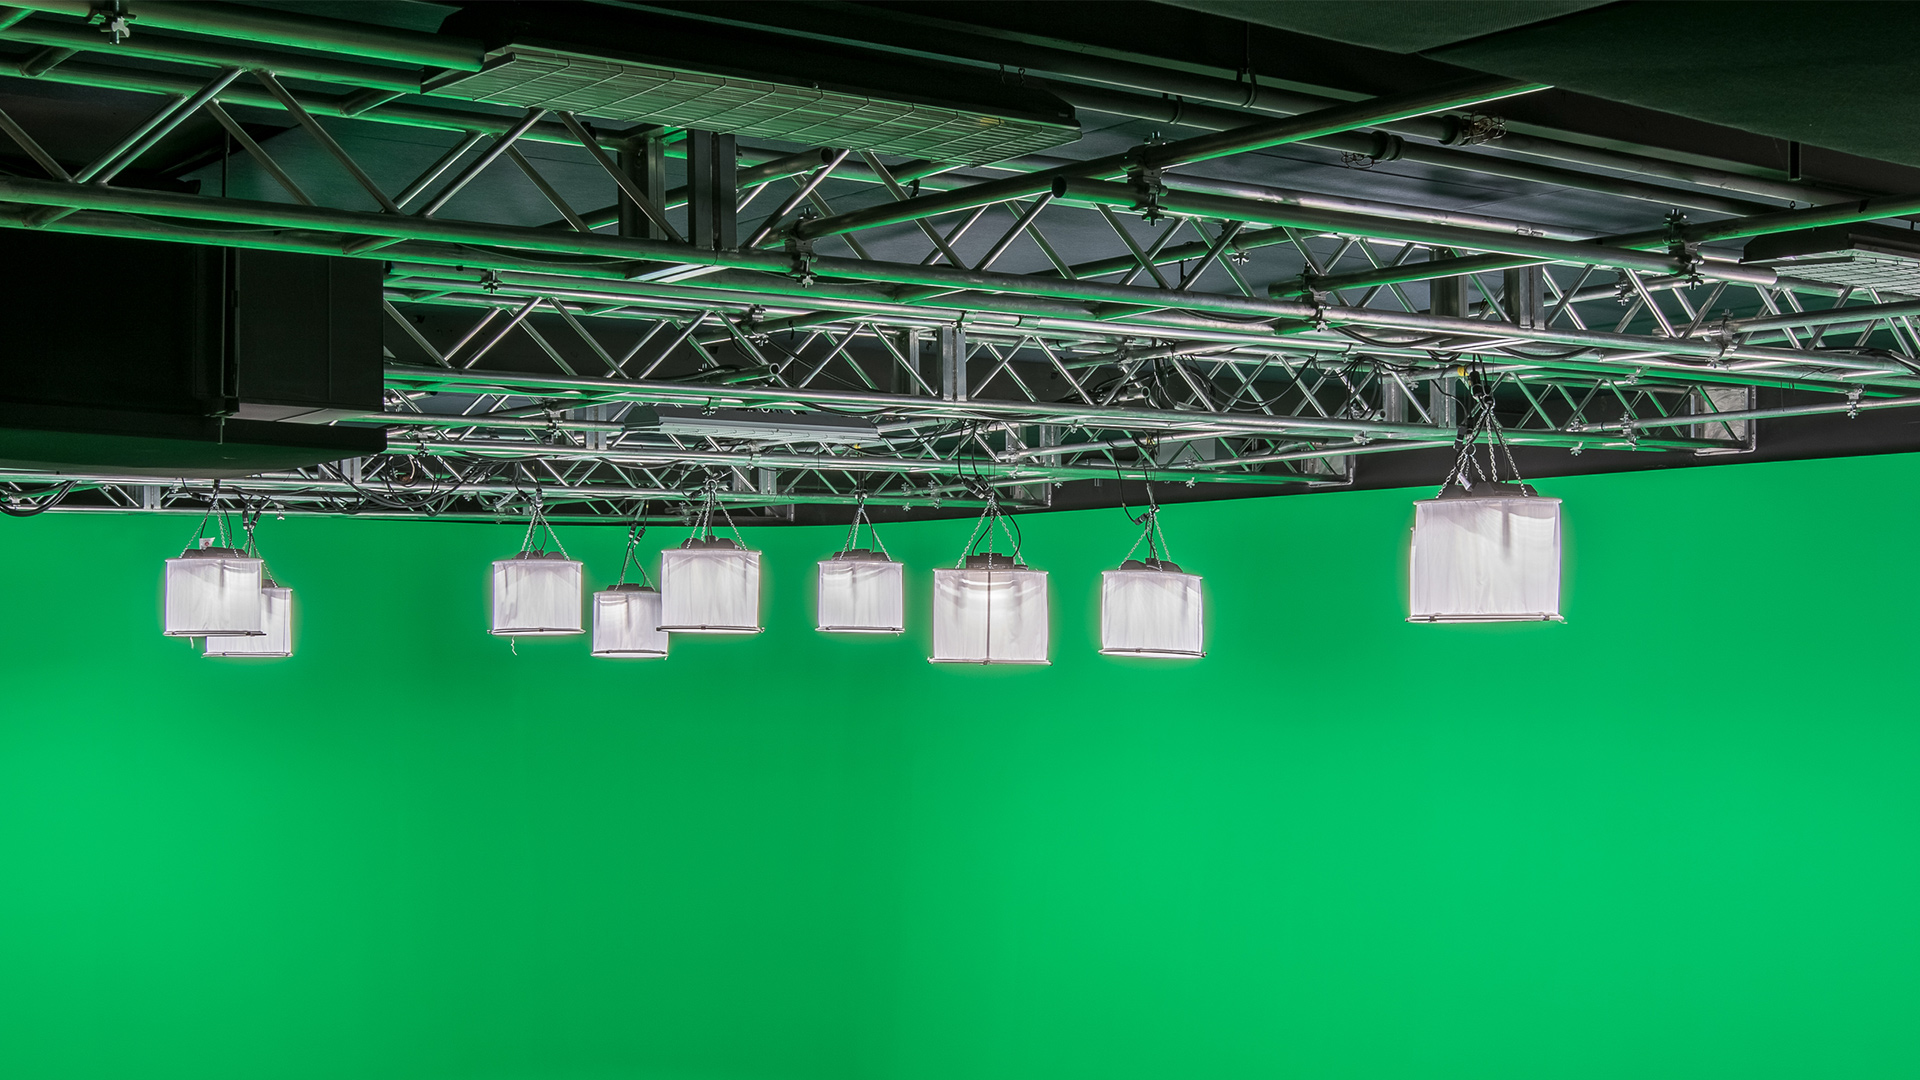 wirework-green-screen-sf-south-bay-studio